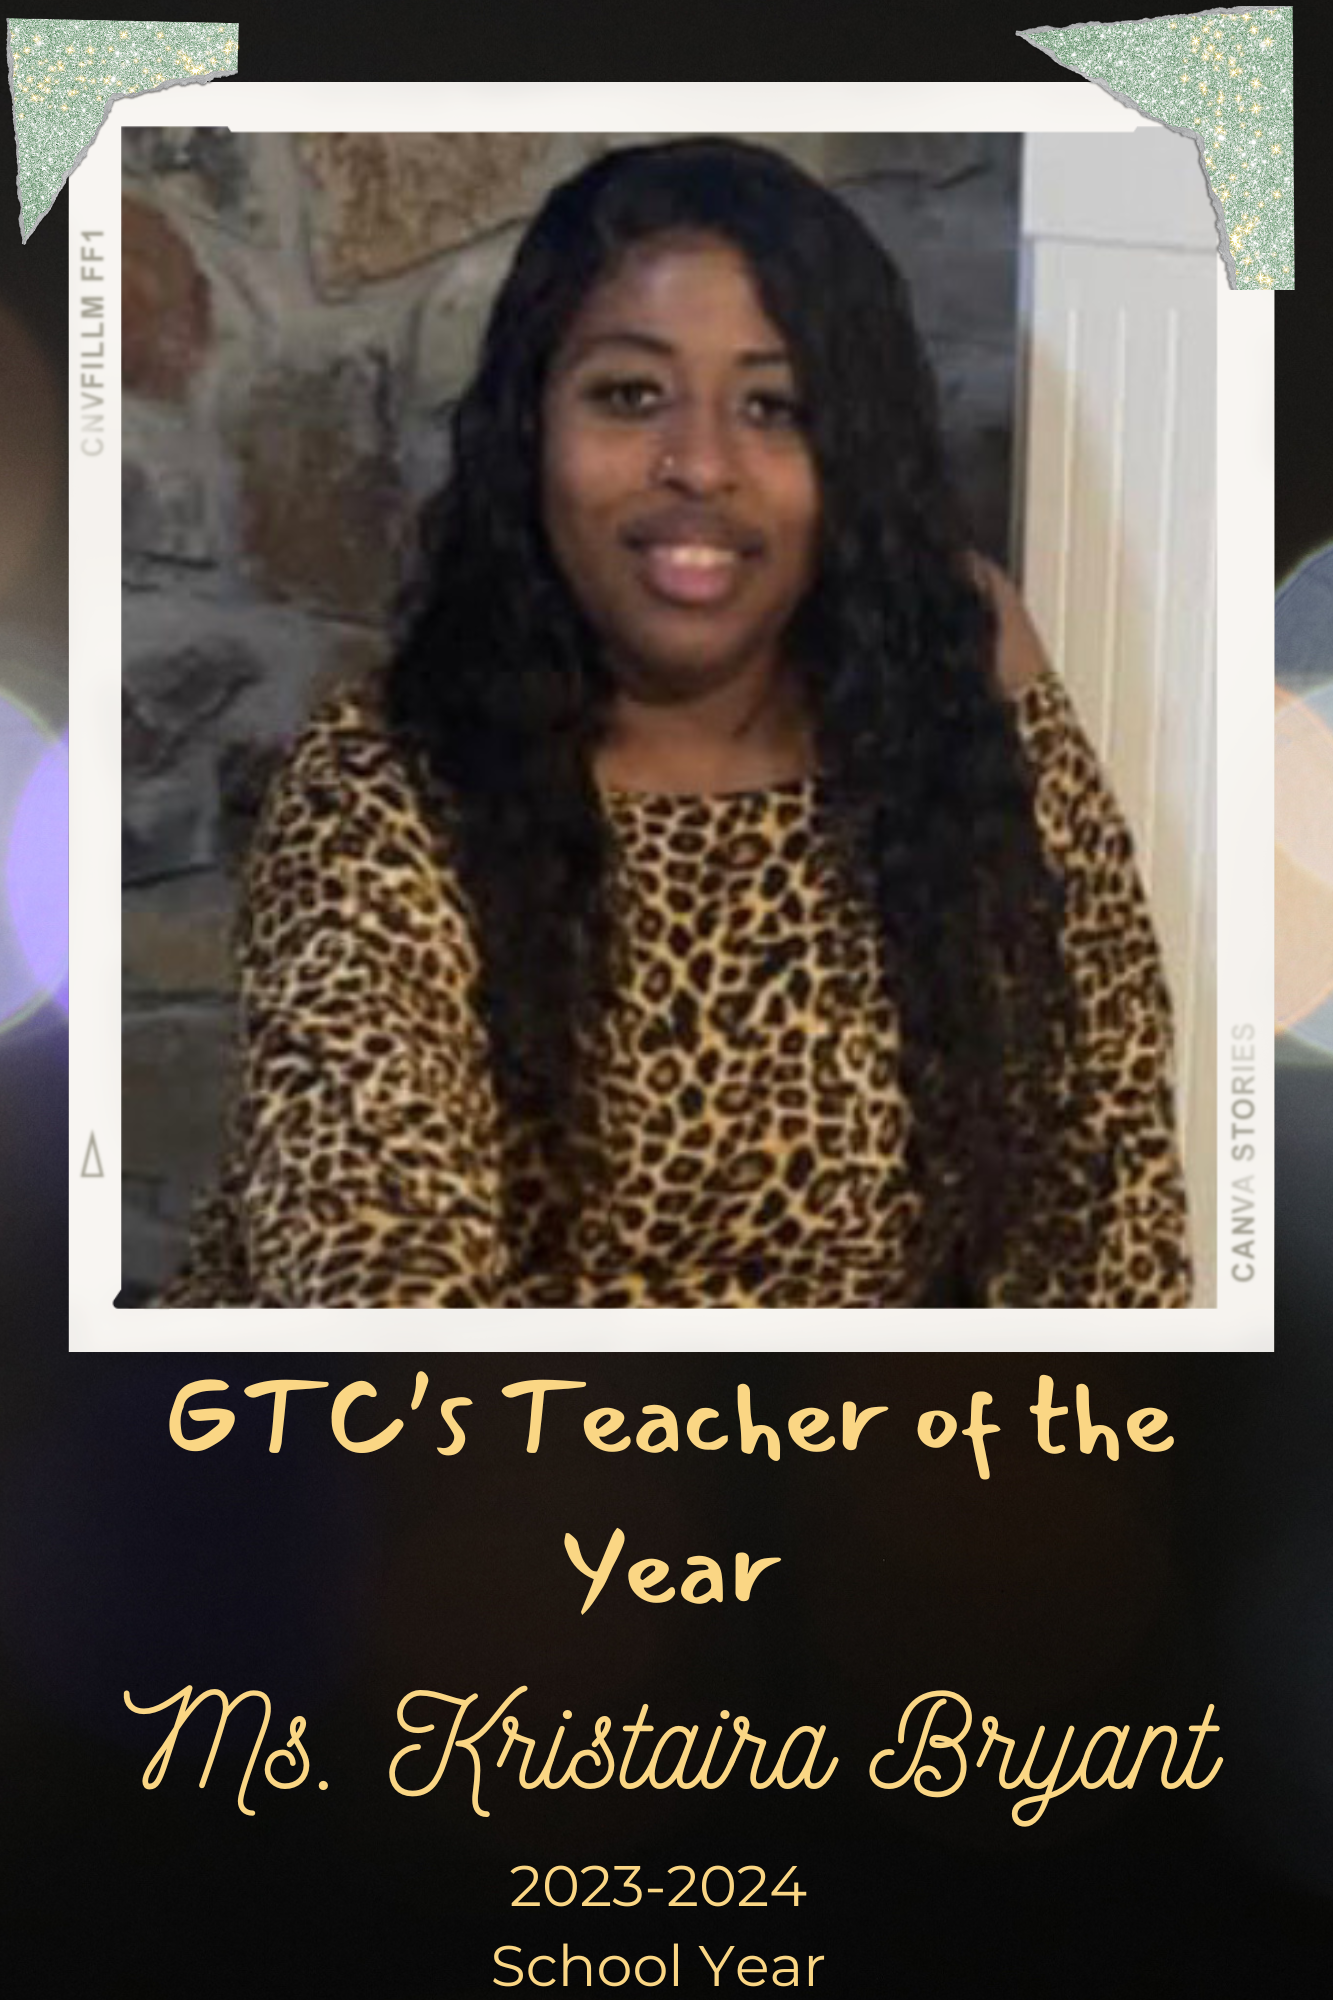 GTC's Teacher of the Year, Ms. Kristaira Bryant 2023-2024 school year